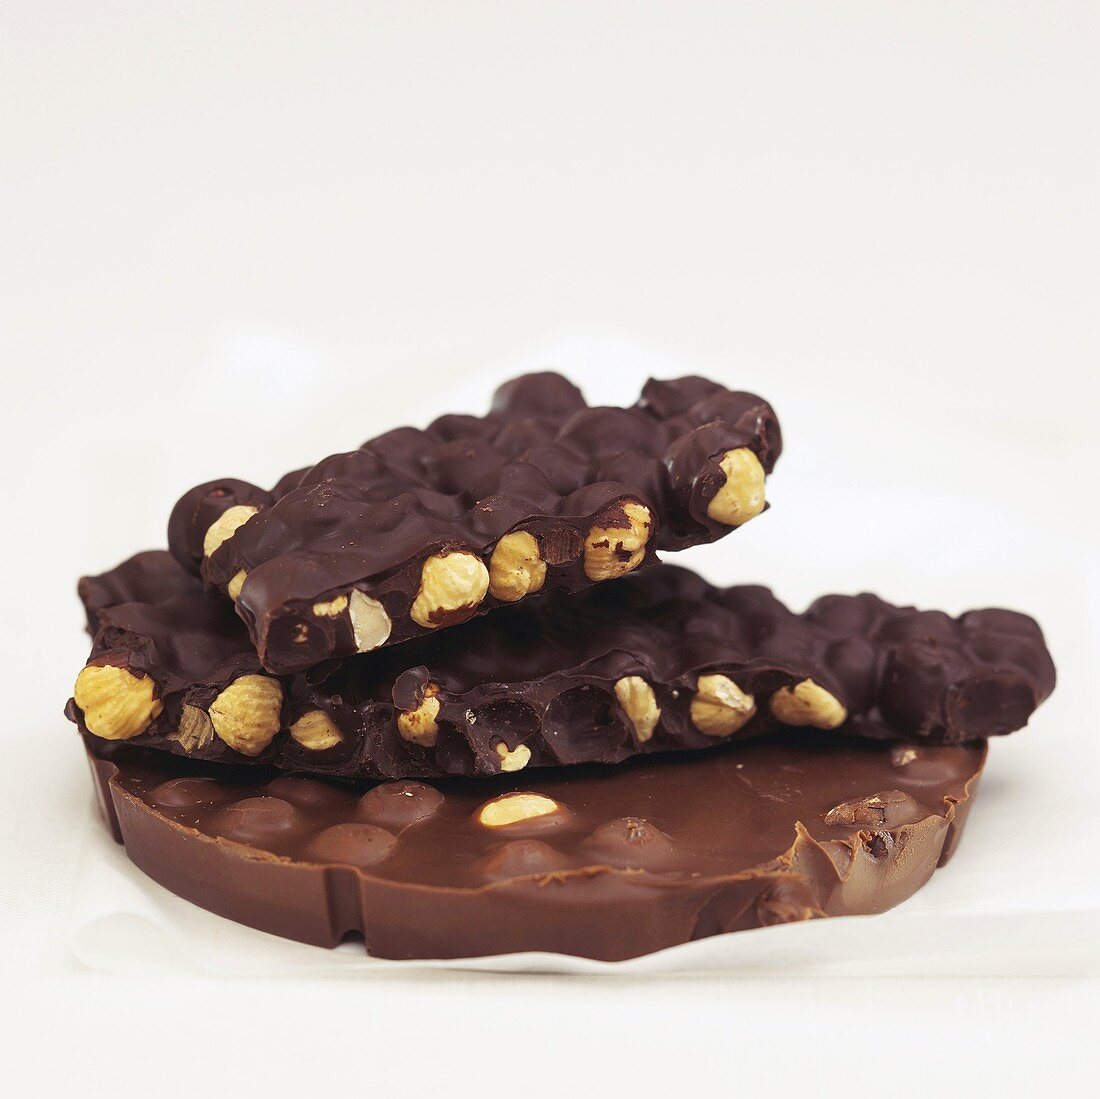 Chocolate with hazelnuts, close-up